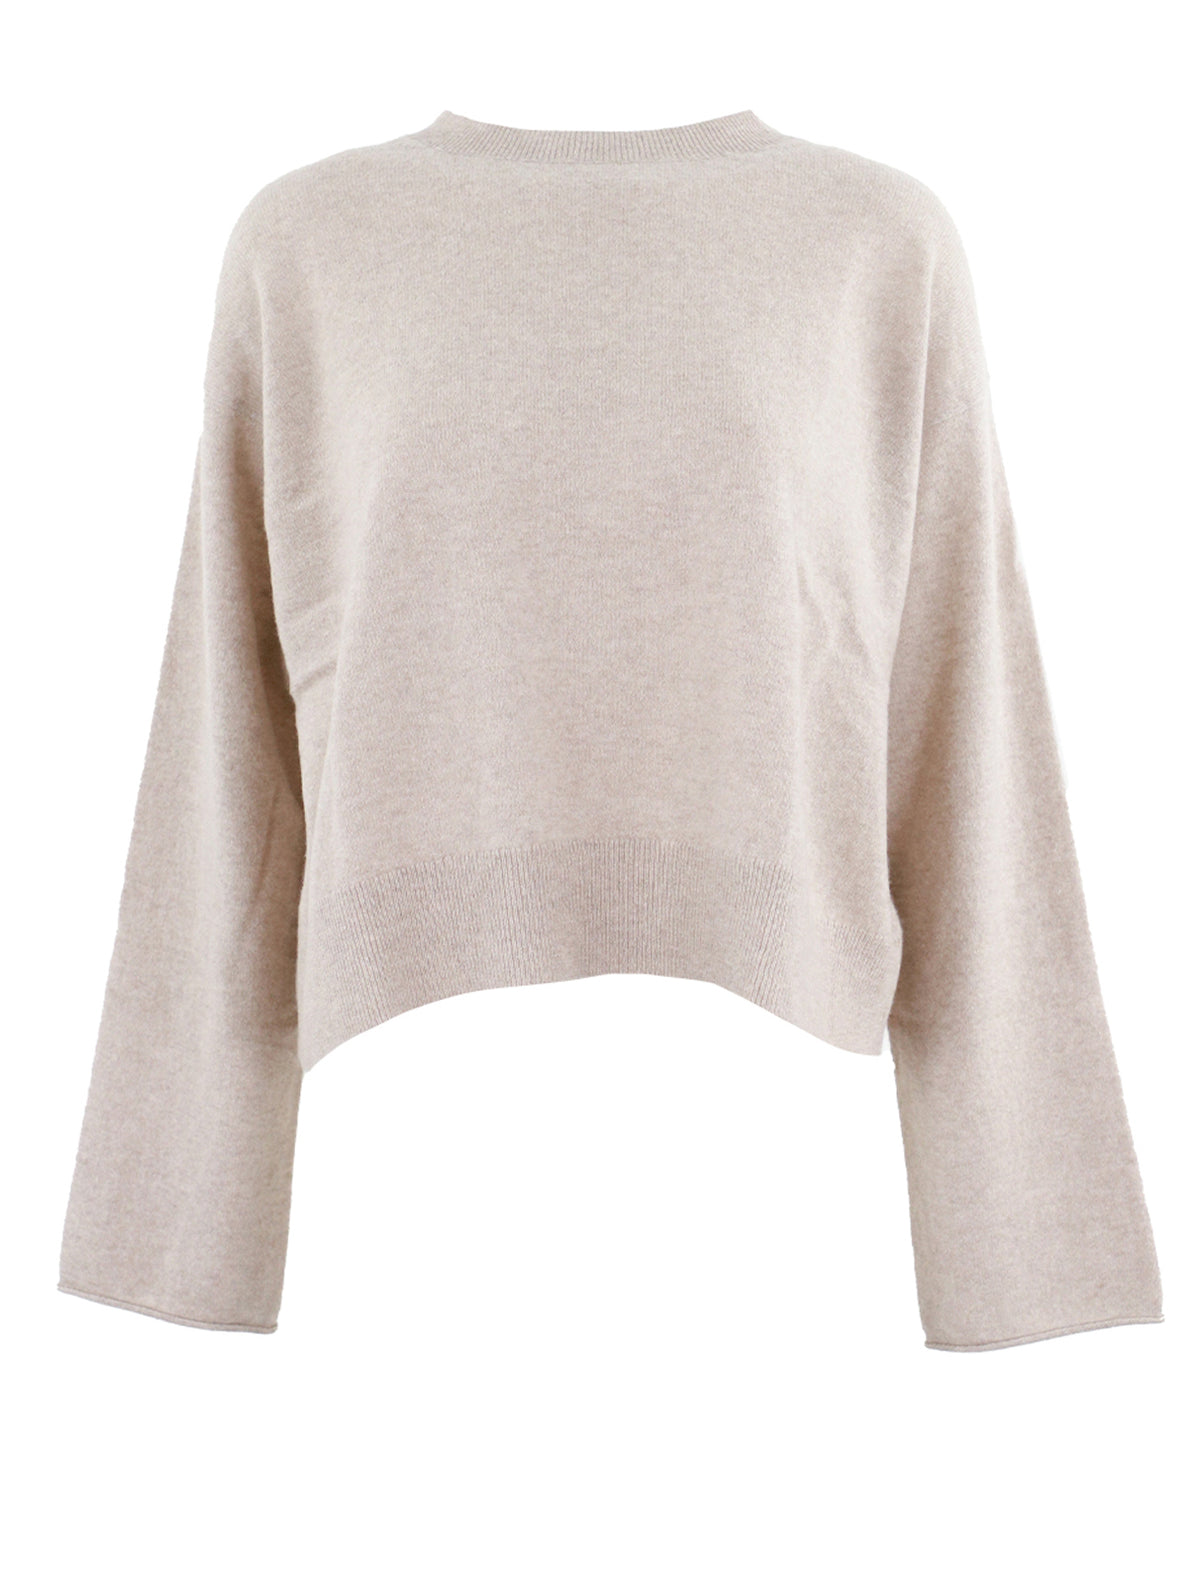 Shop Sofie D'Hoore Merril Cropped Knit Sweater Online | Camargue ...